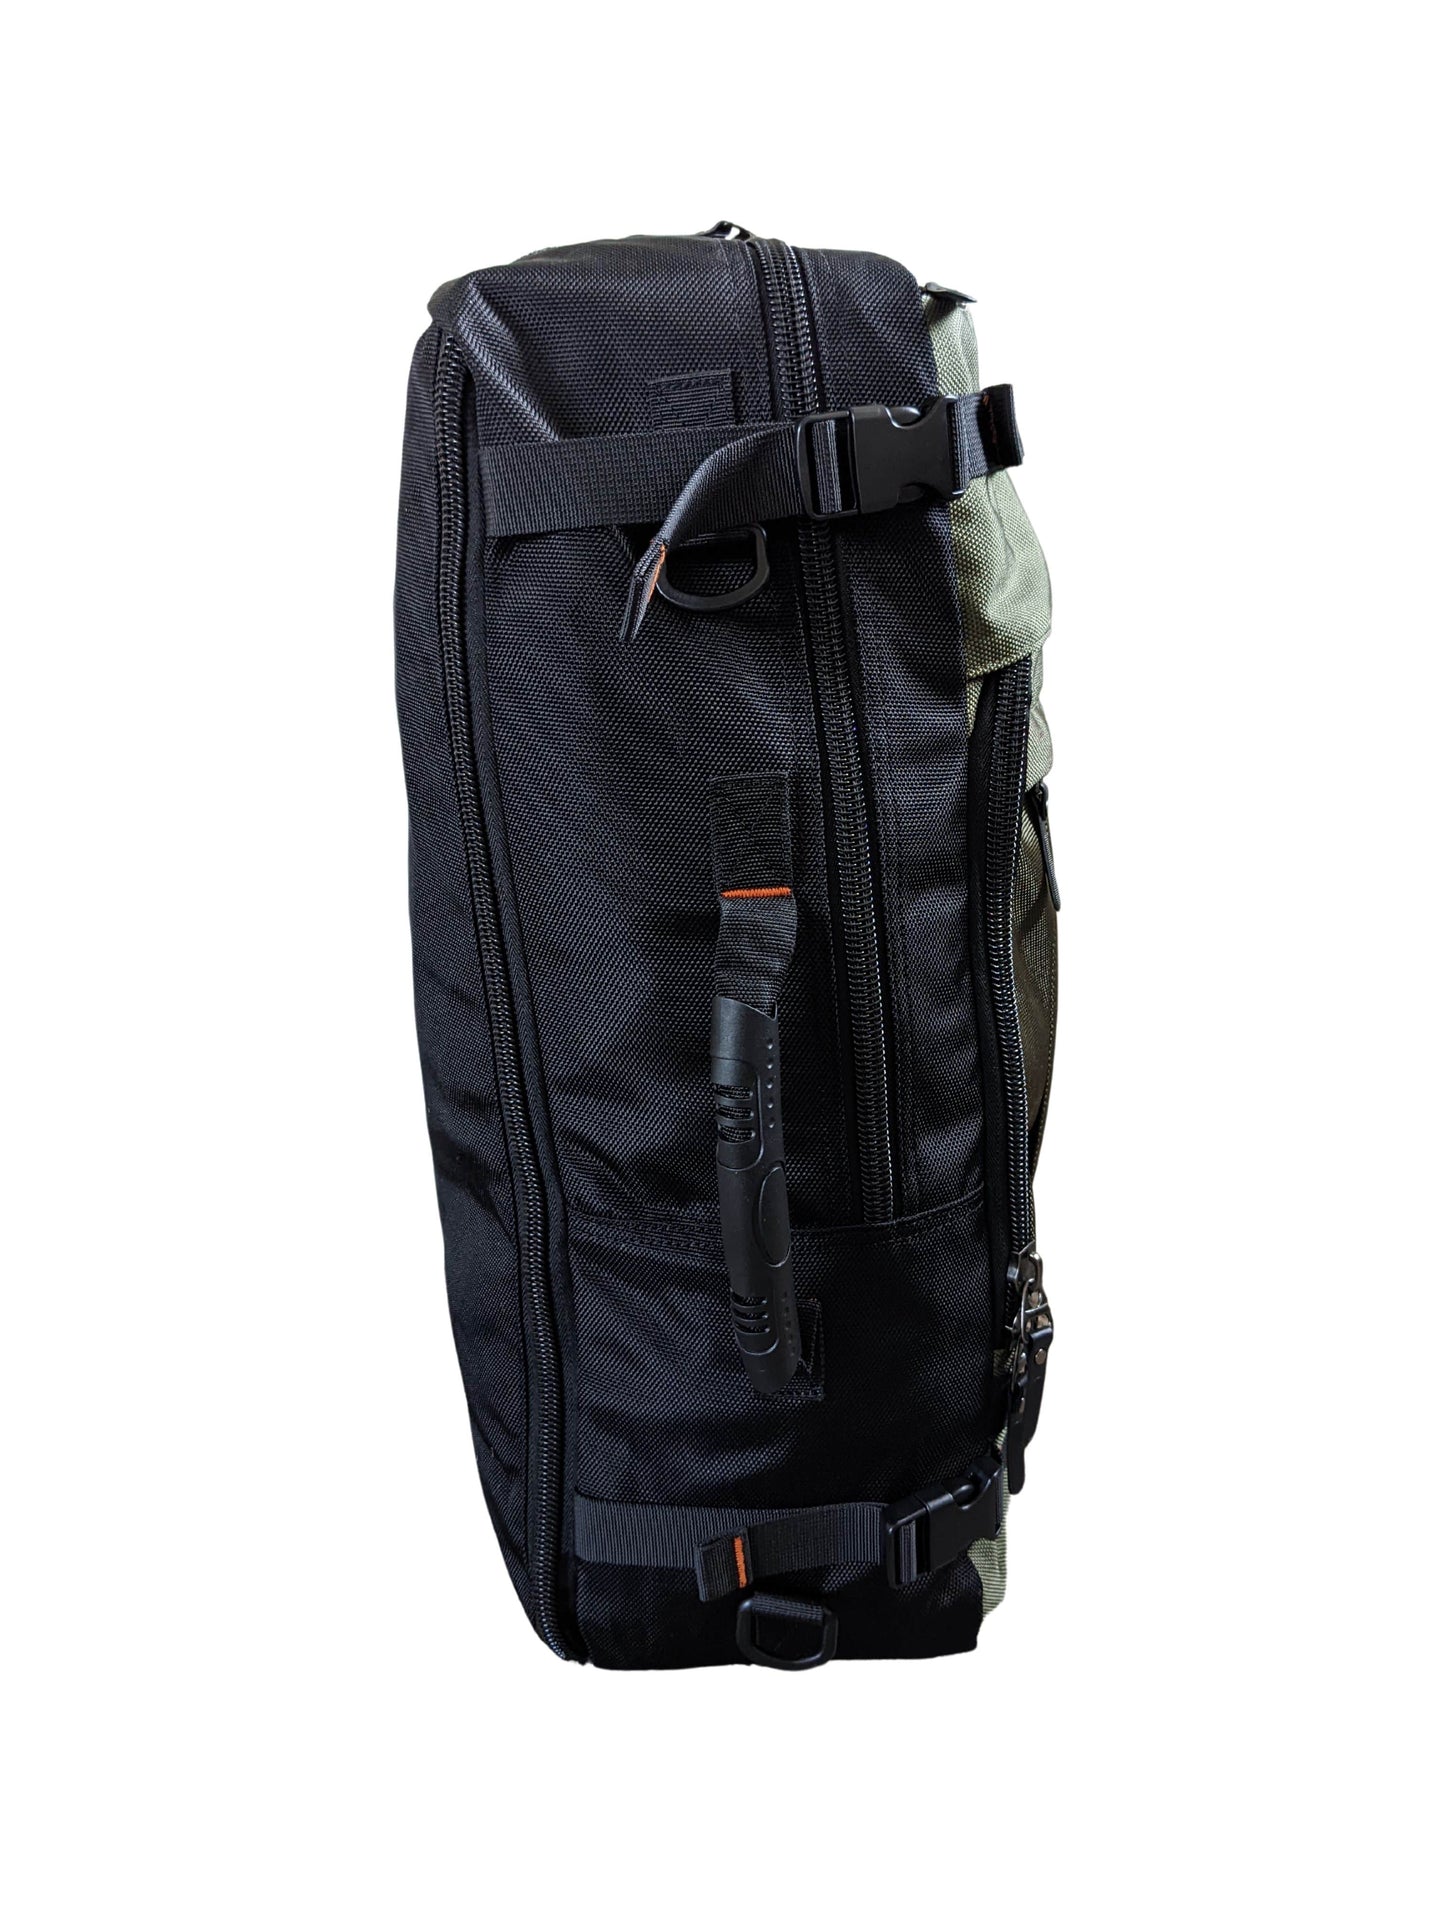 Backpack handle side